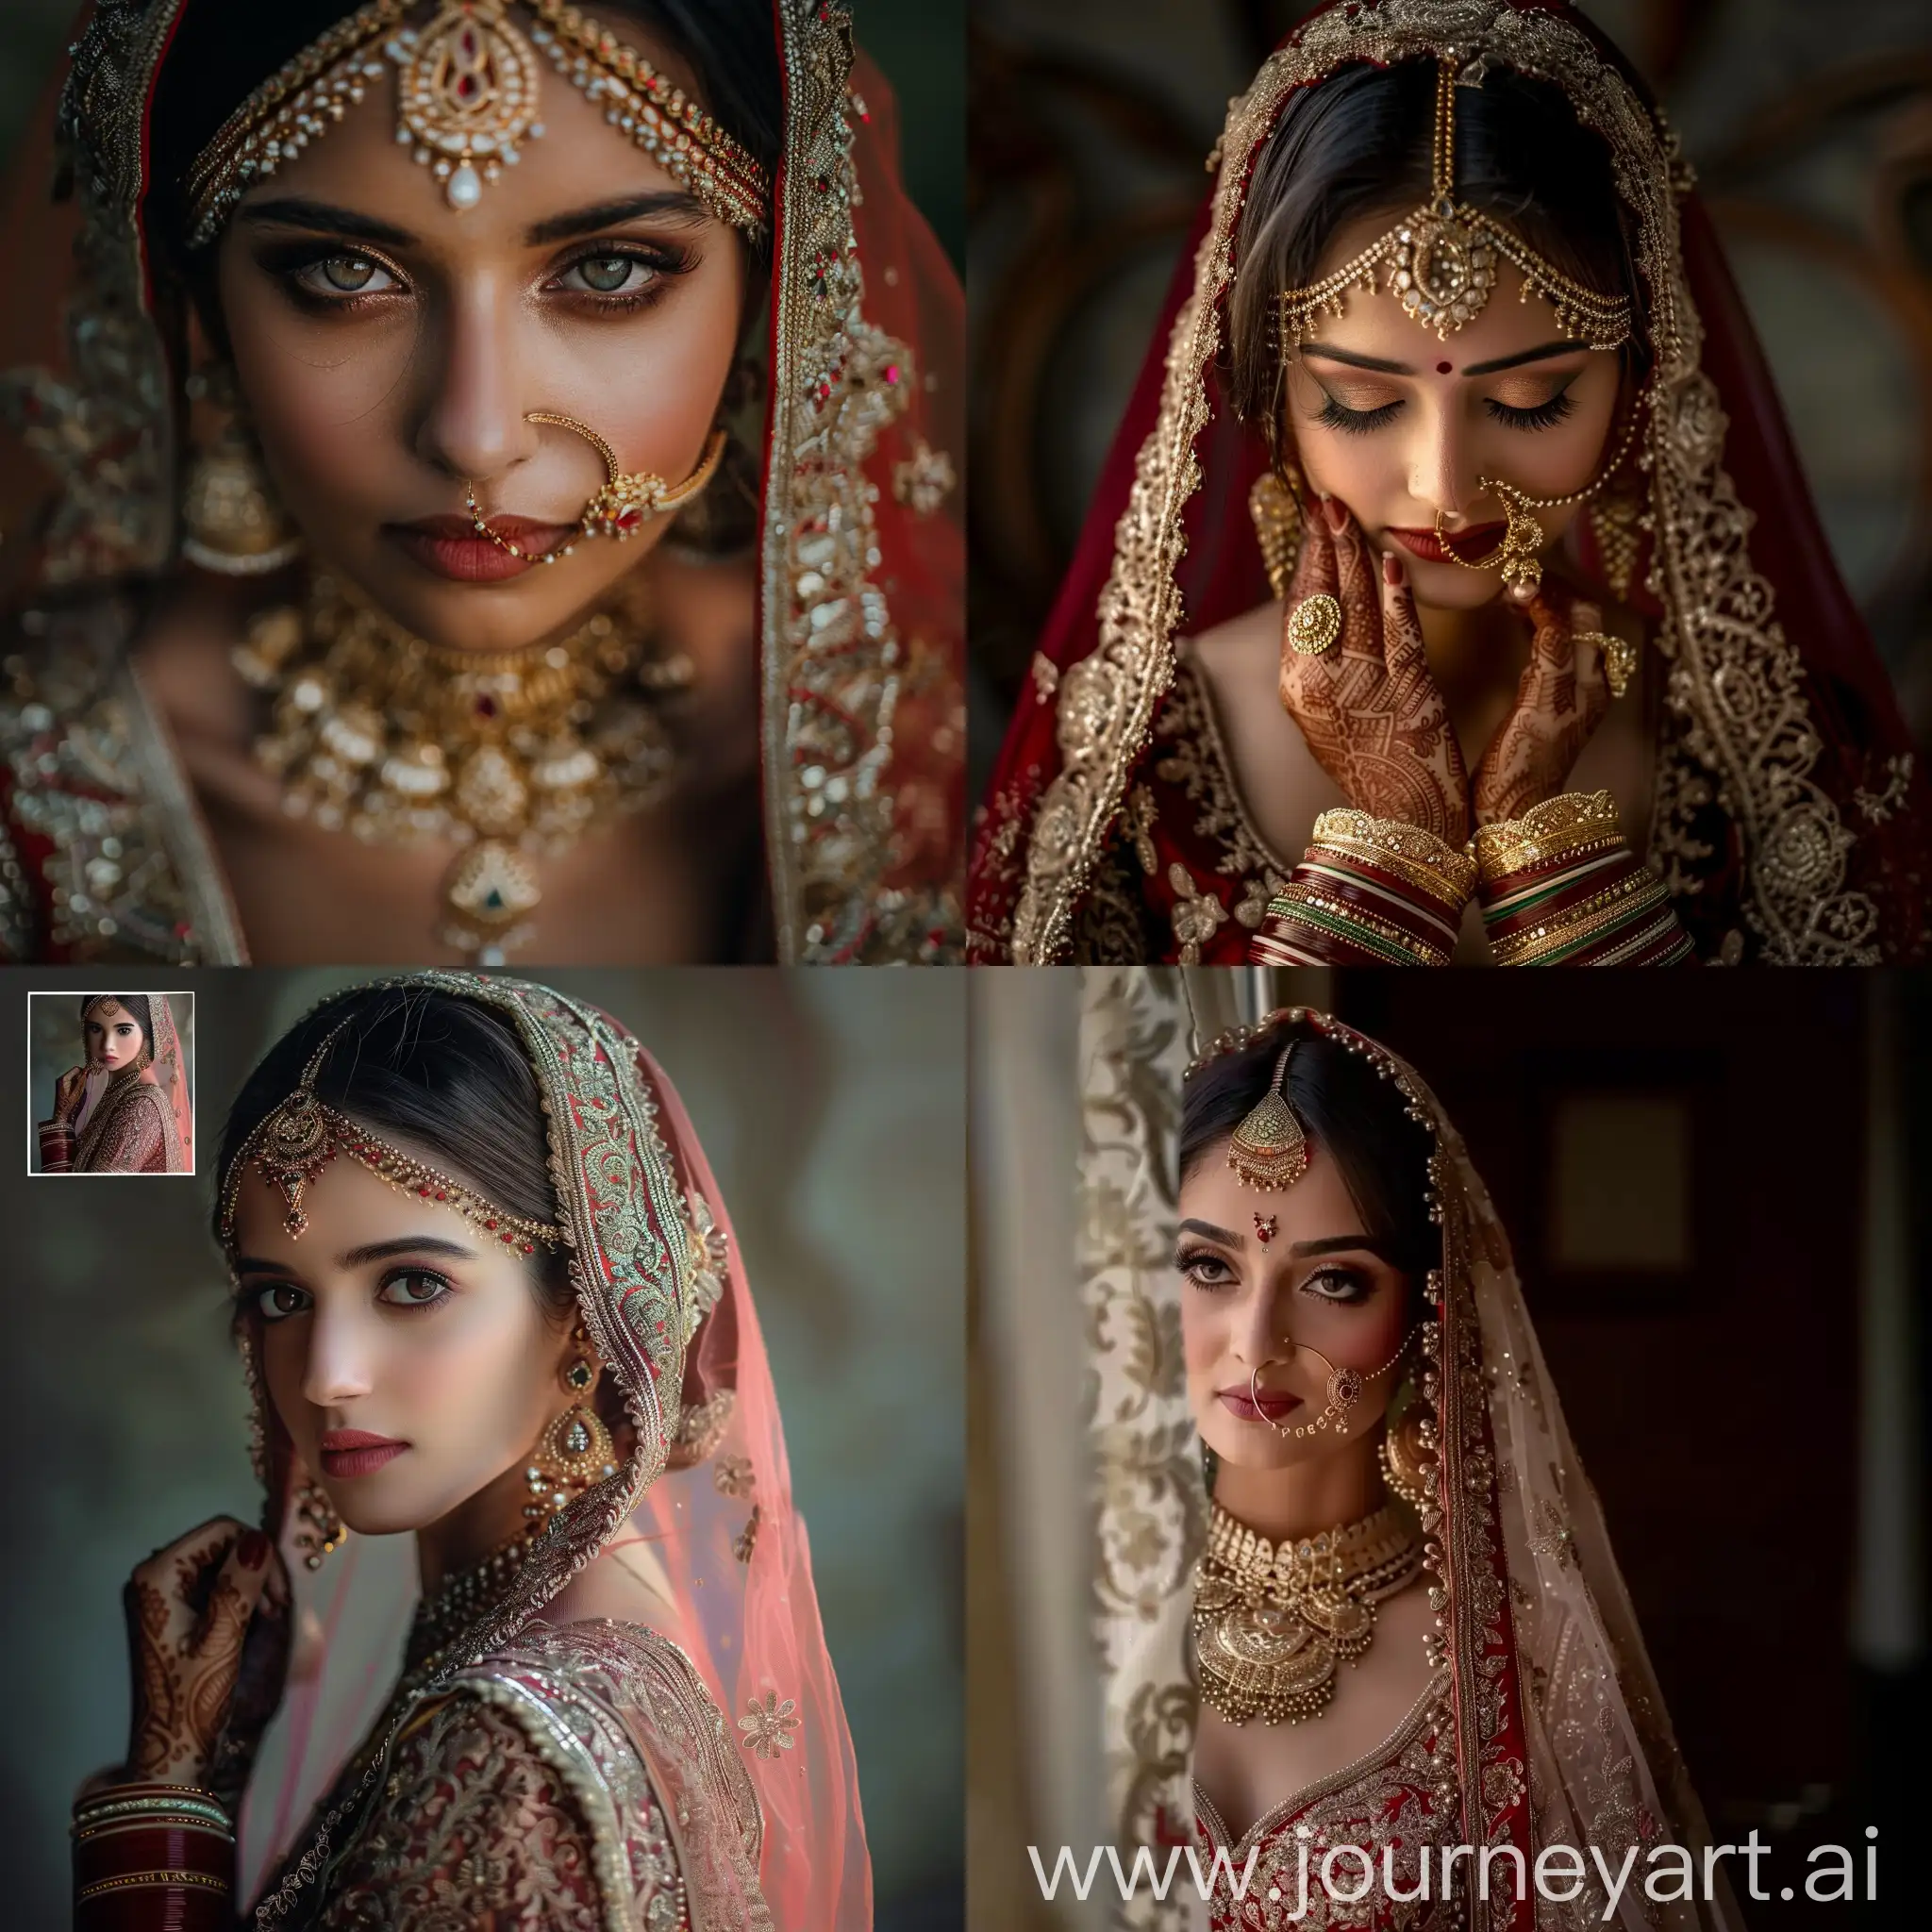 Stunning-Indian-Bride-in-Traditional-Wedding-Attire